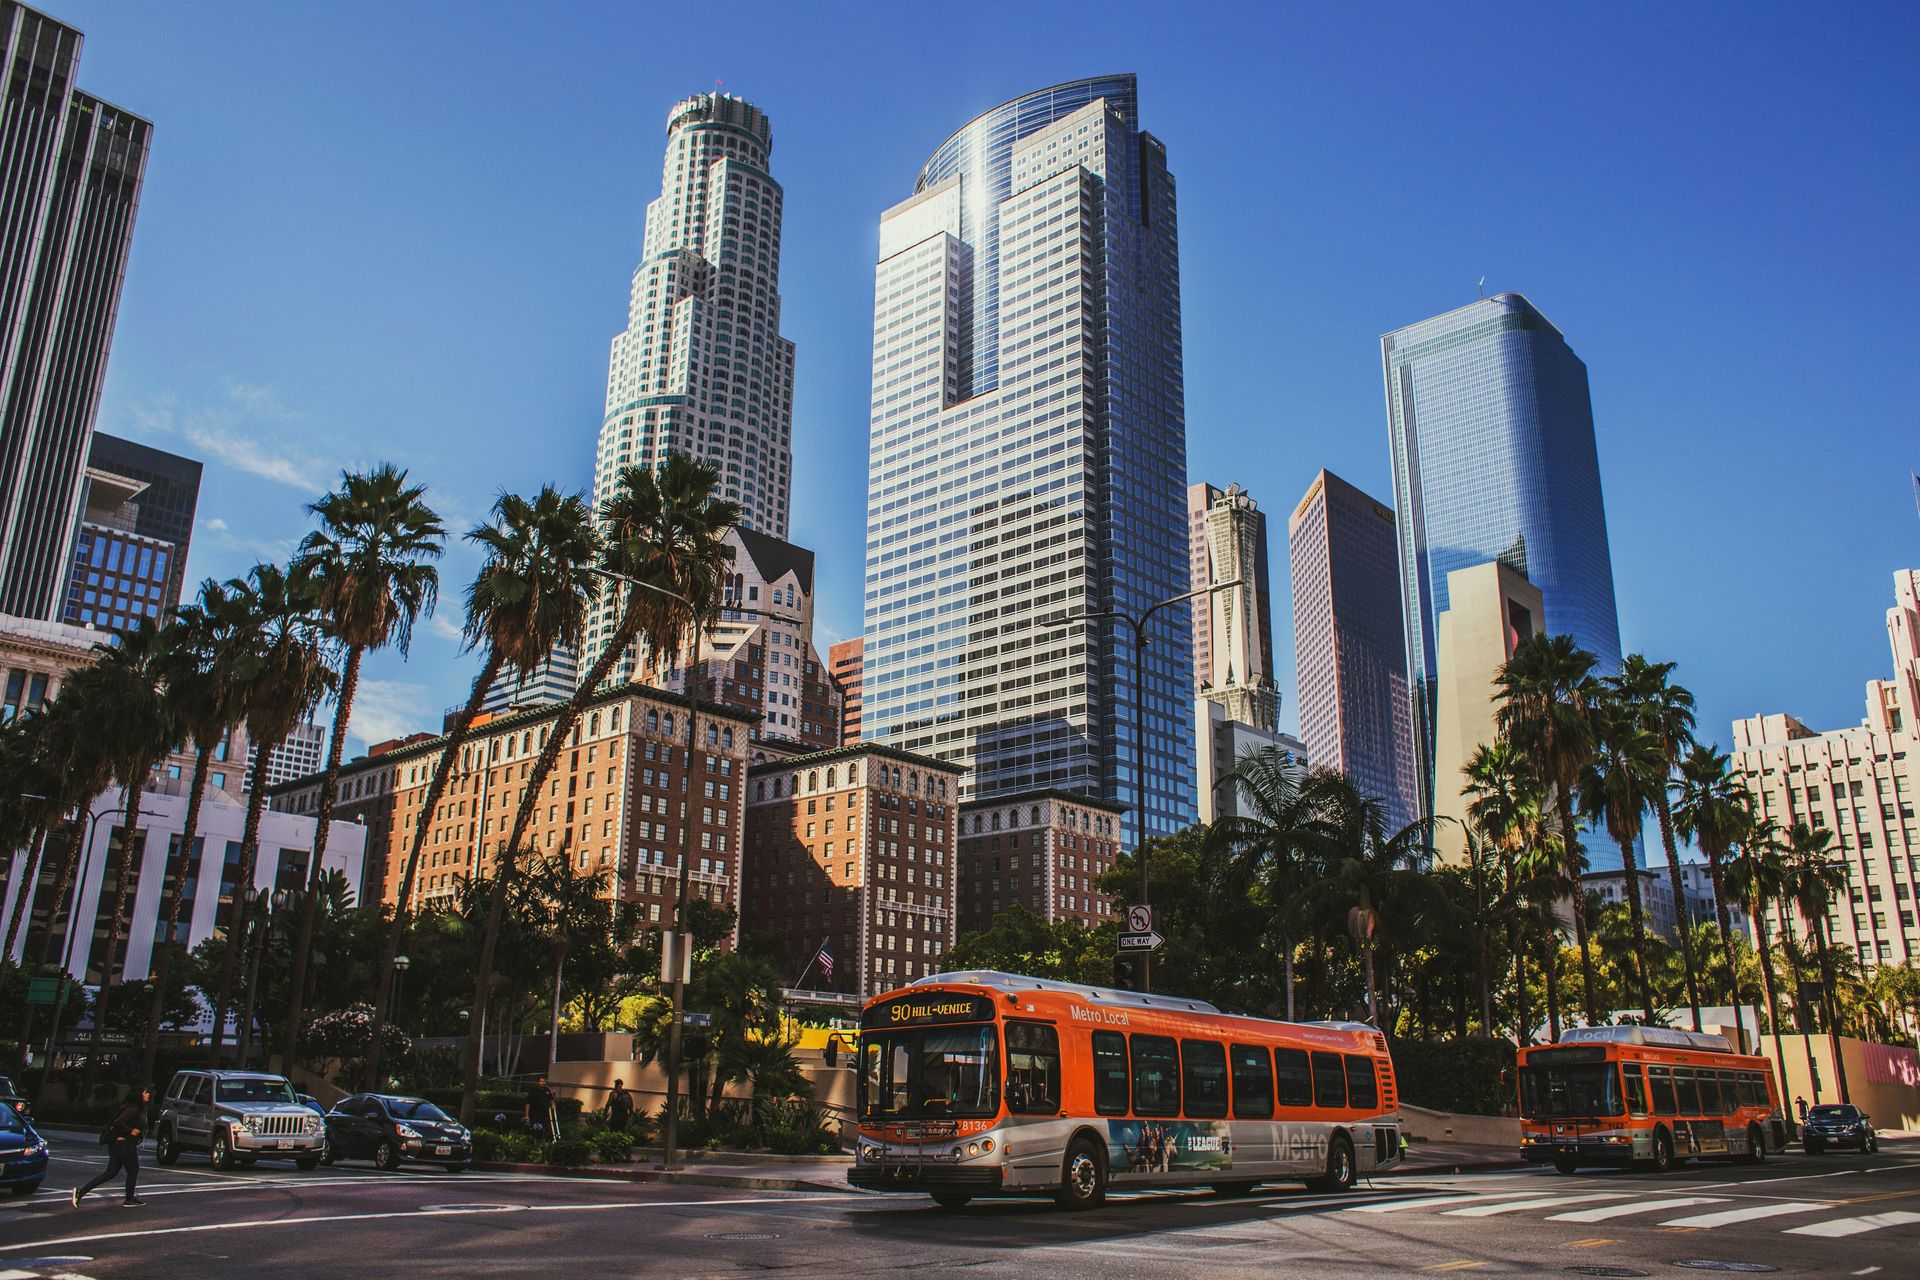 6# Los Angeles (192,400 millionaires)